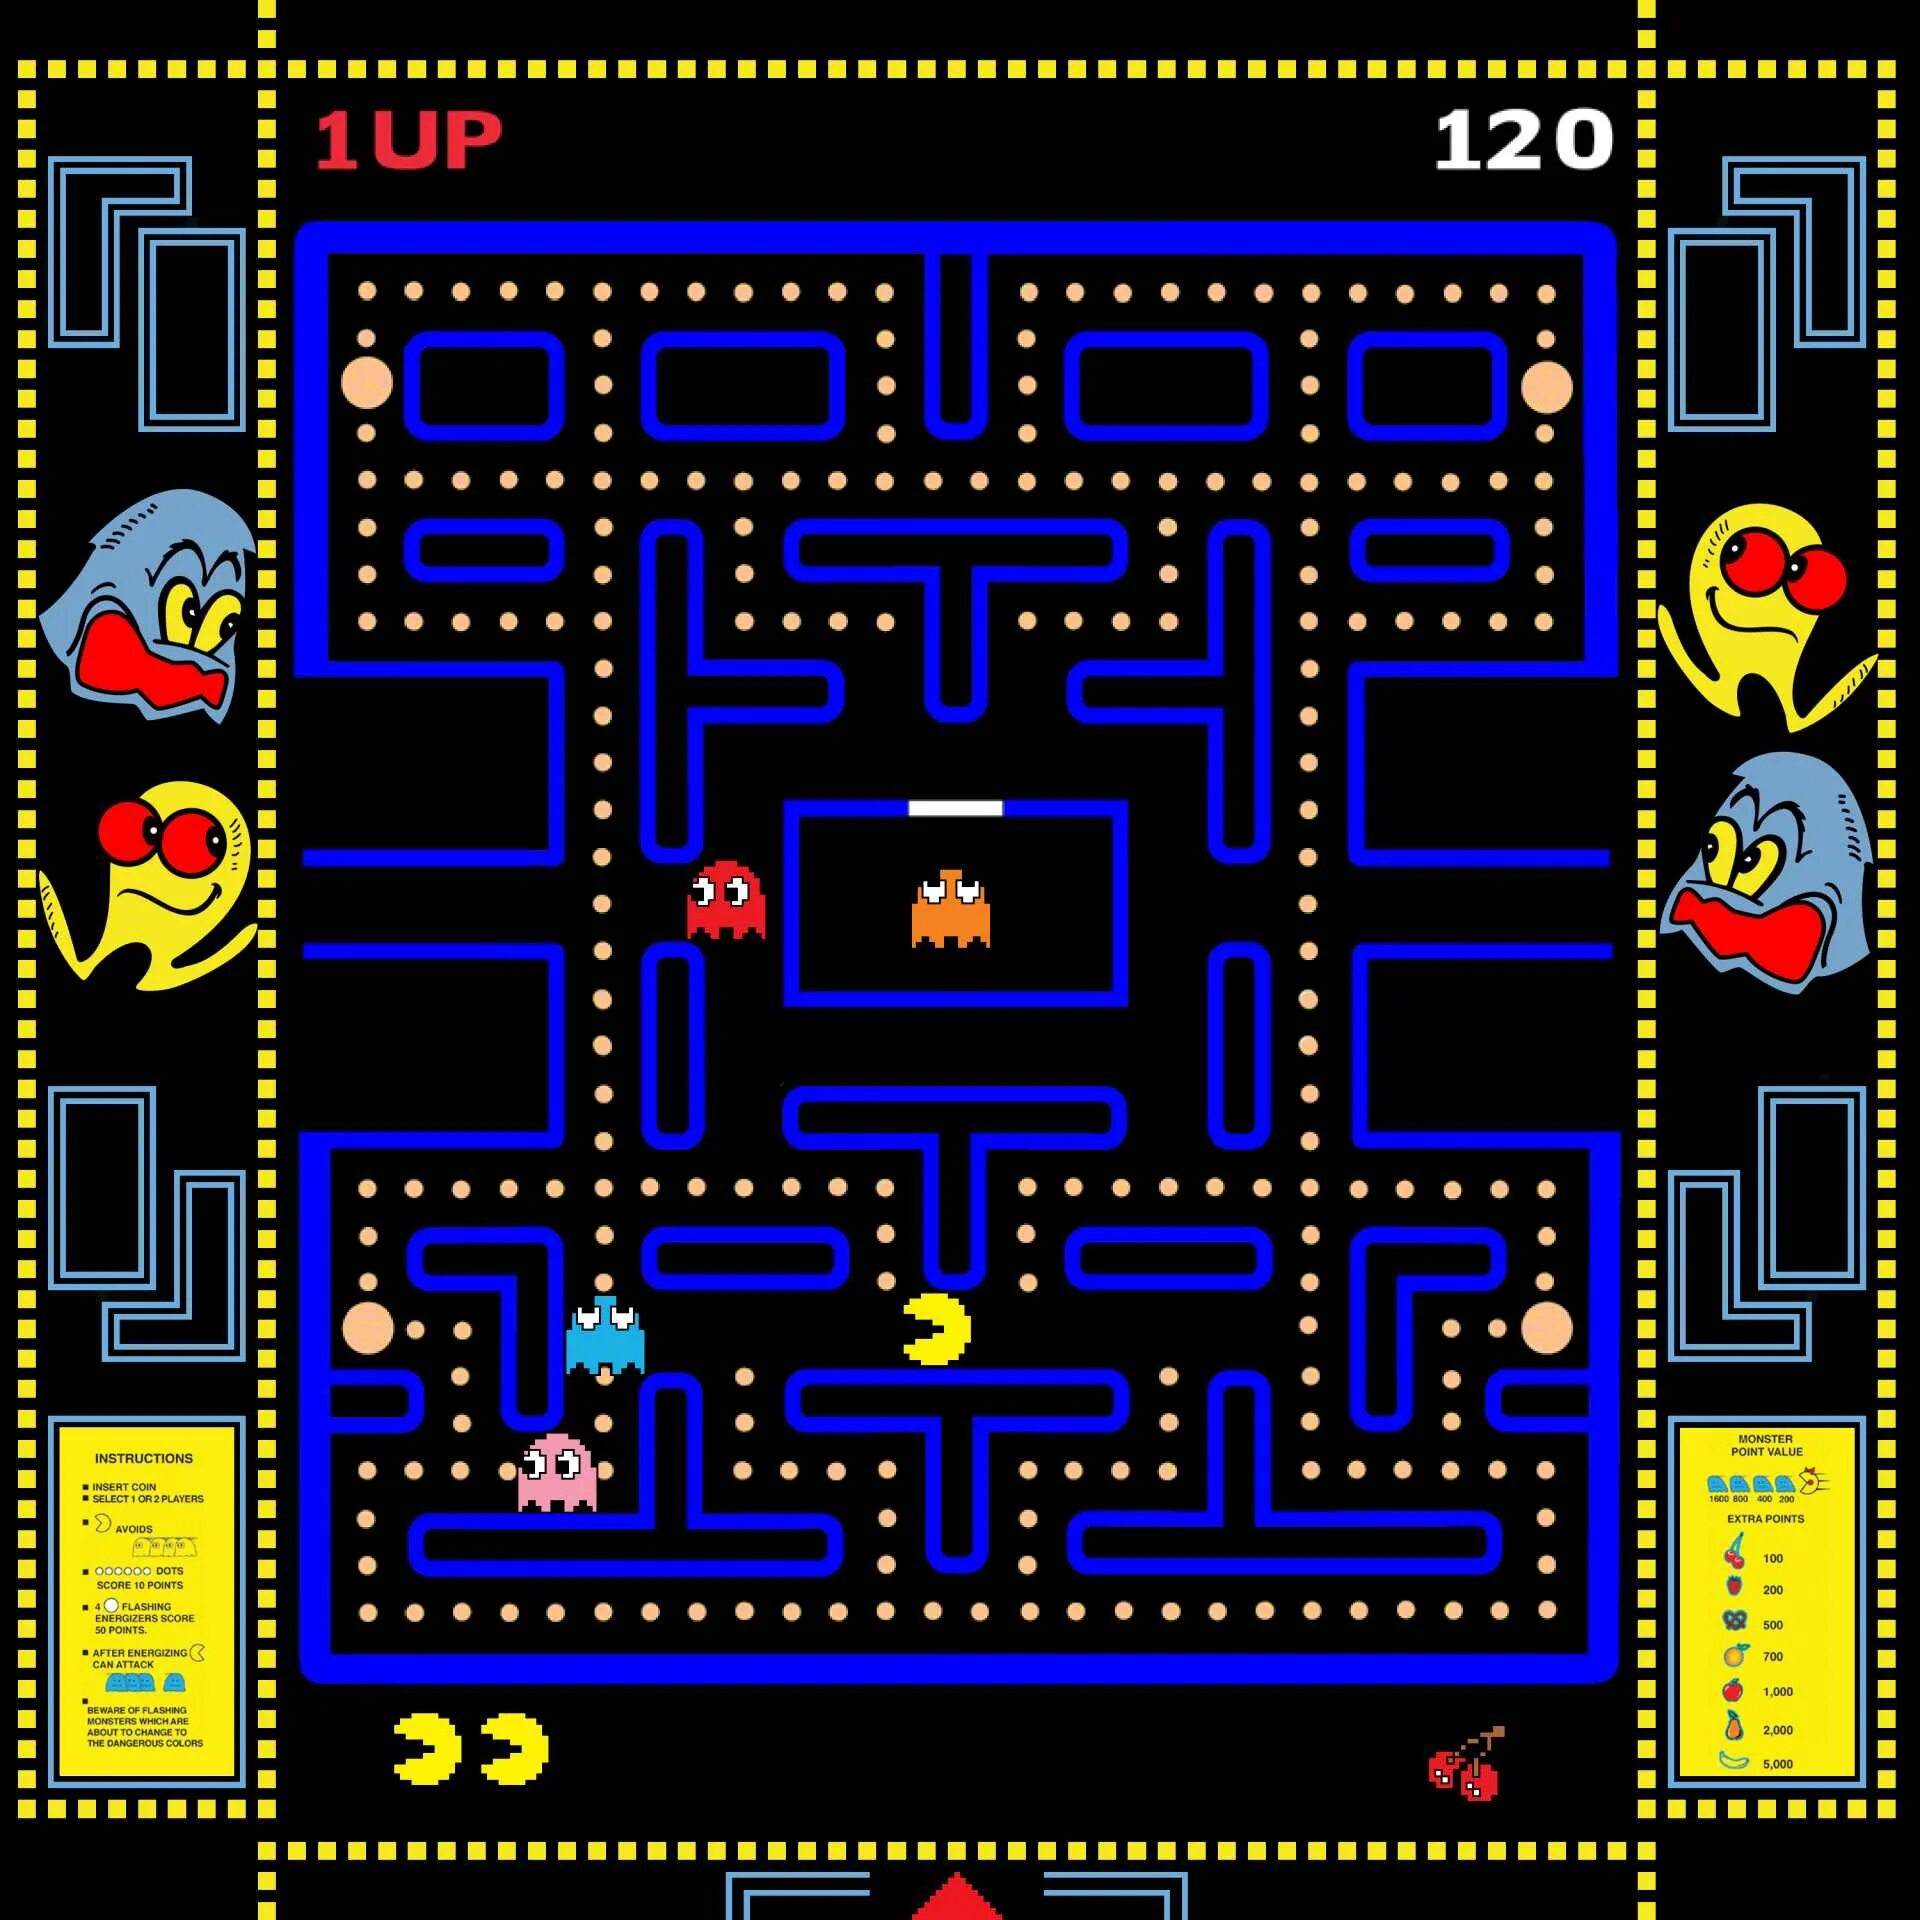 Pac man games. Pacman игра 1980 года. Pack man игра. Pacman 30th Anniversary. Gfr5vfy.